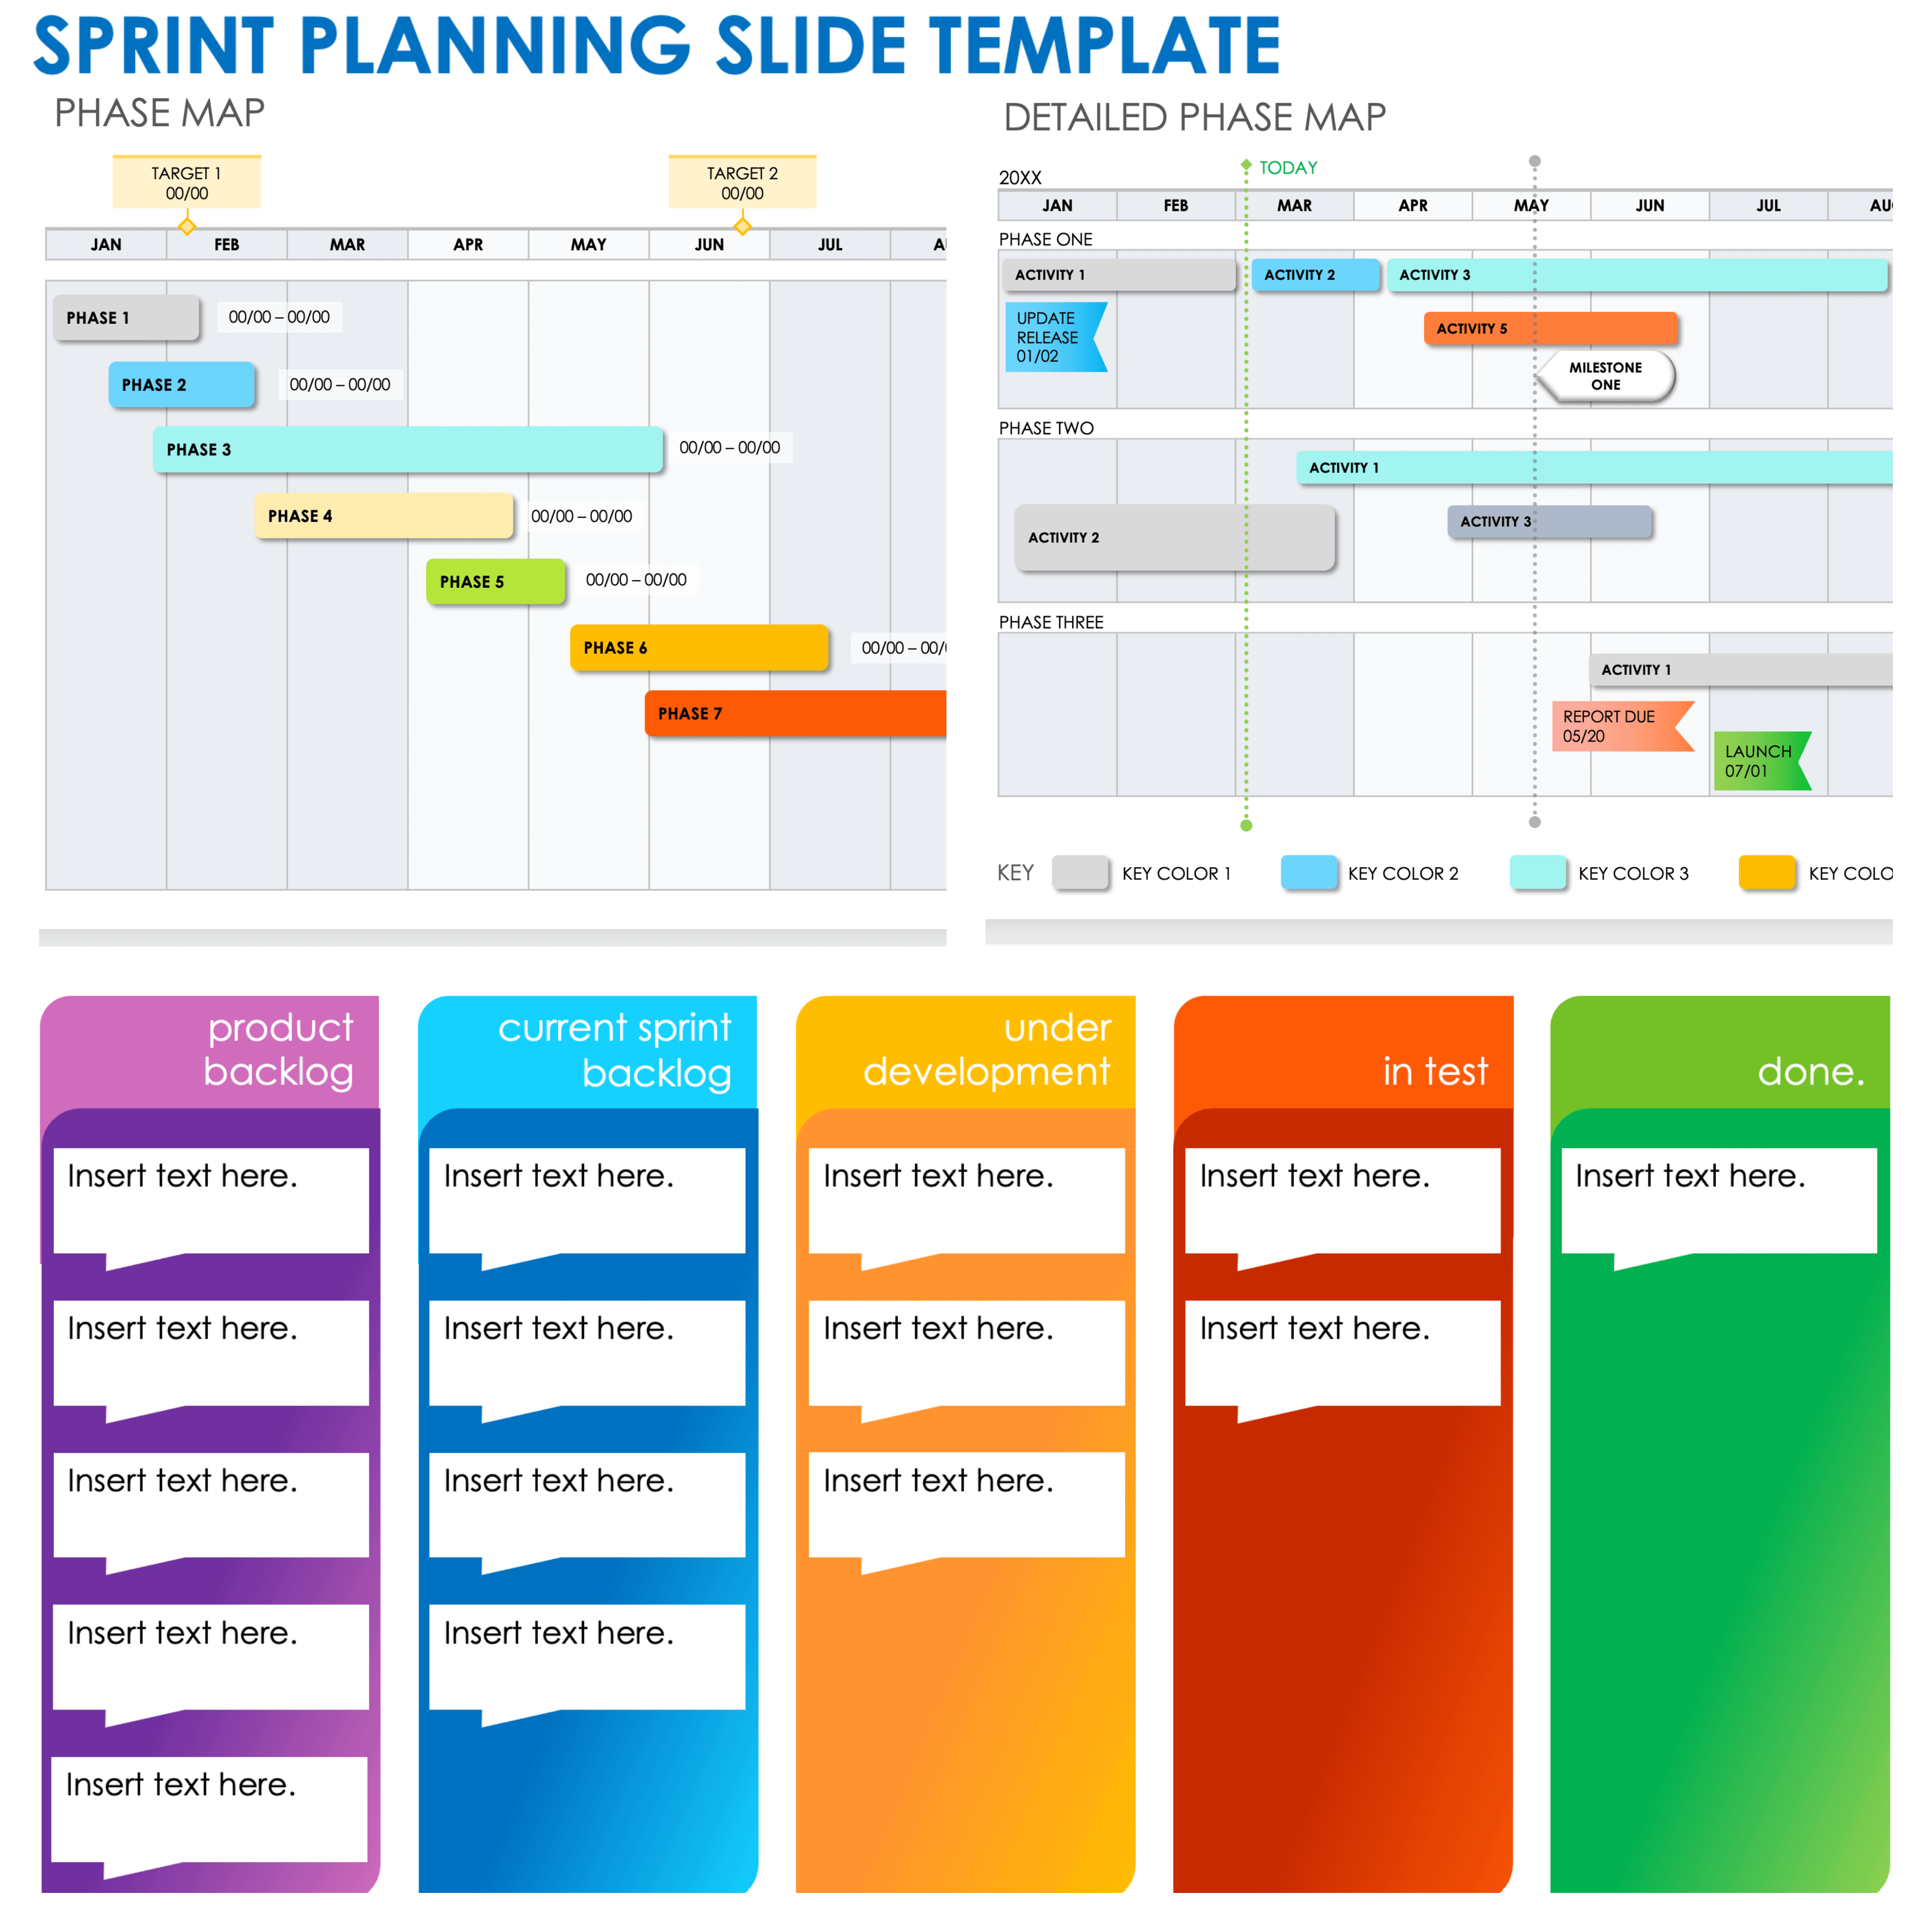 Sprint Planning Slide Template